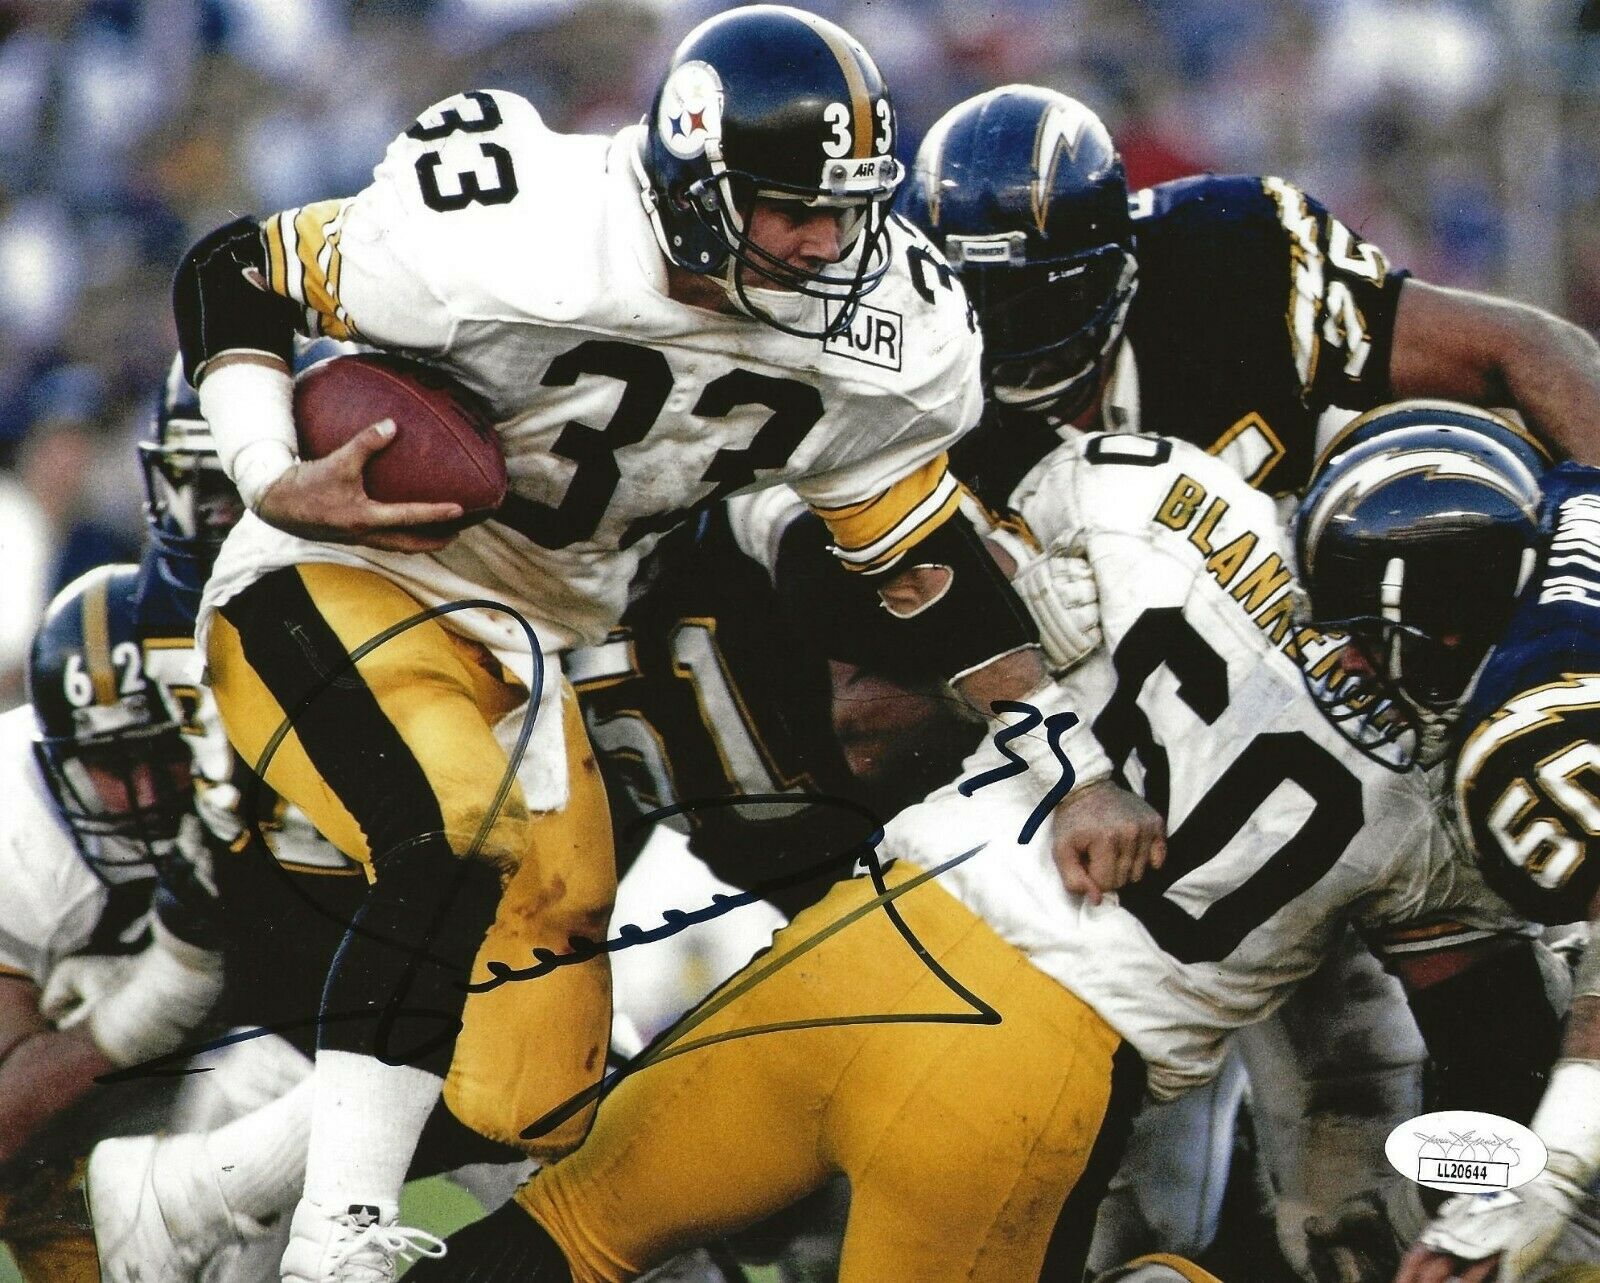 Merril Hoge autographed 8x10 Photo Pittsburgh Steelers